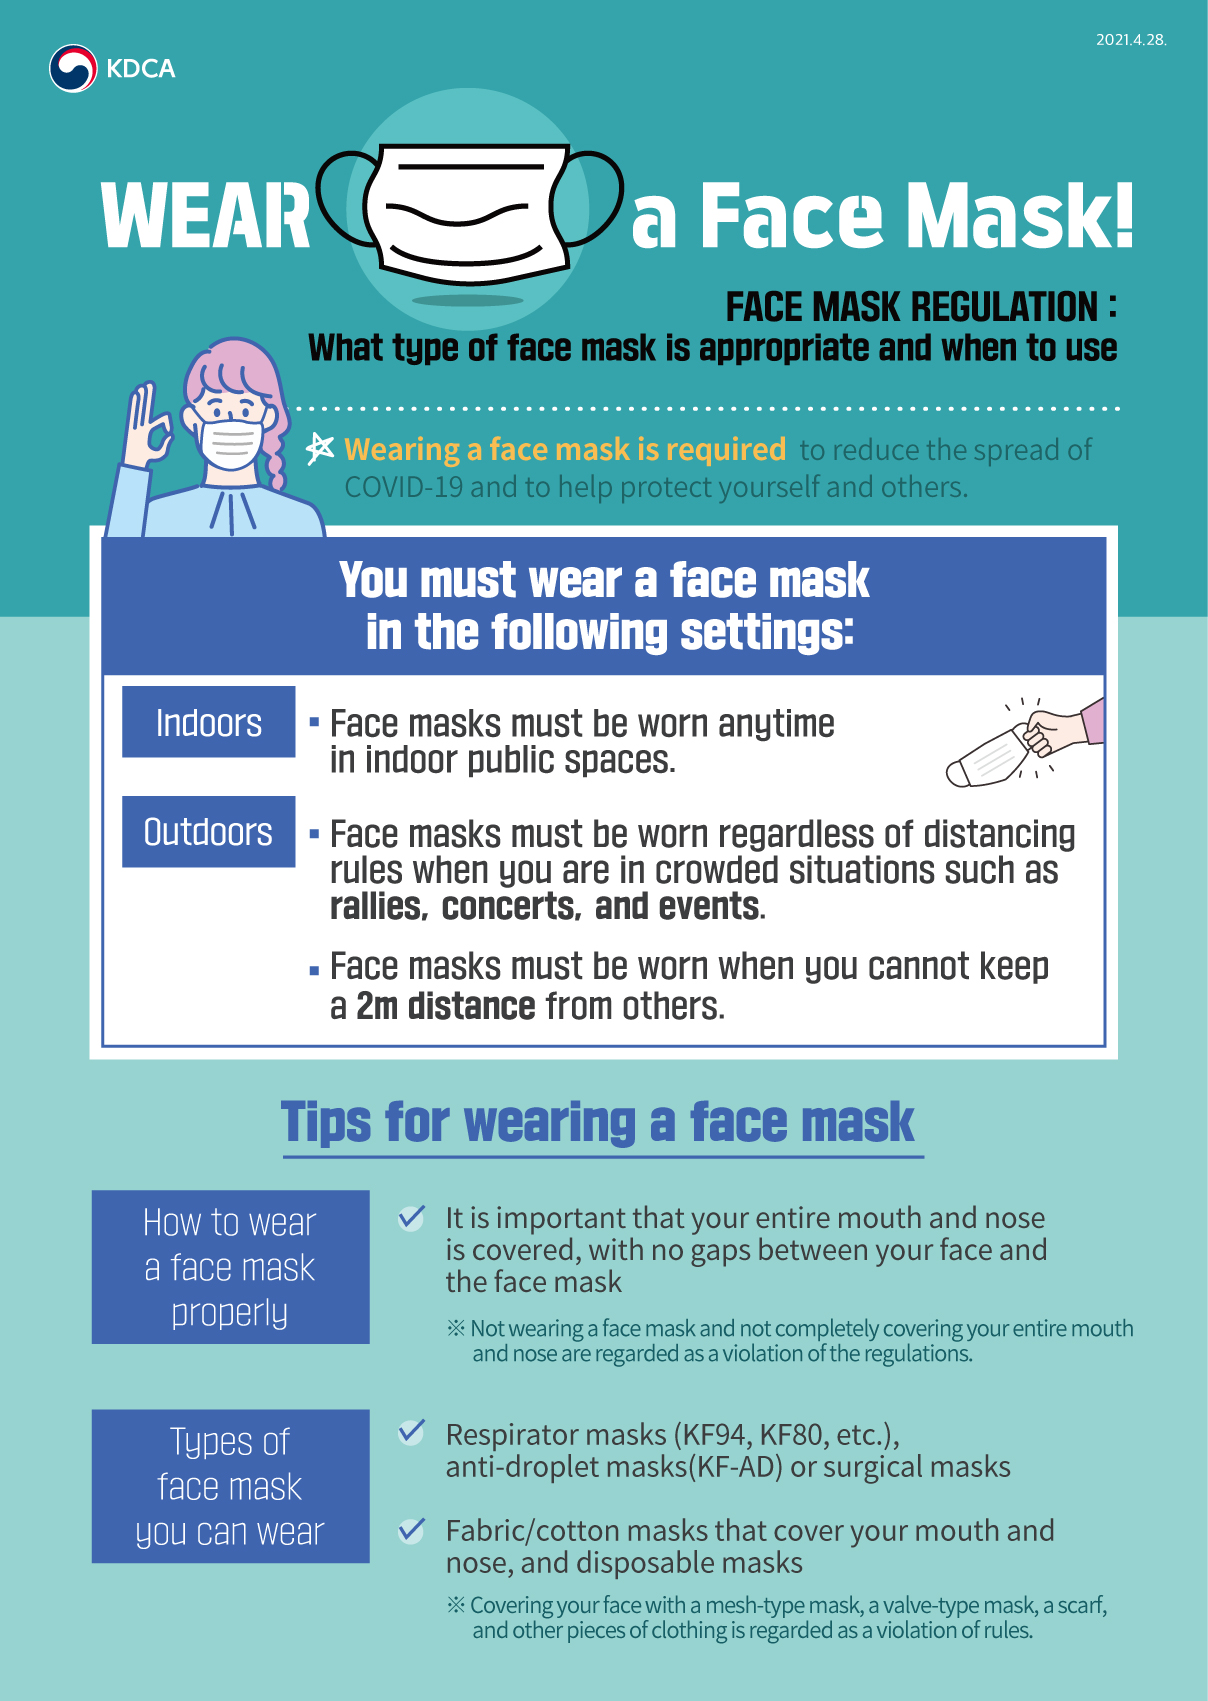 Wear a face Mask! image(3)